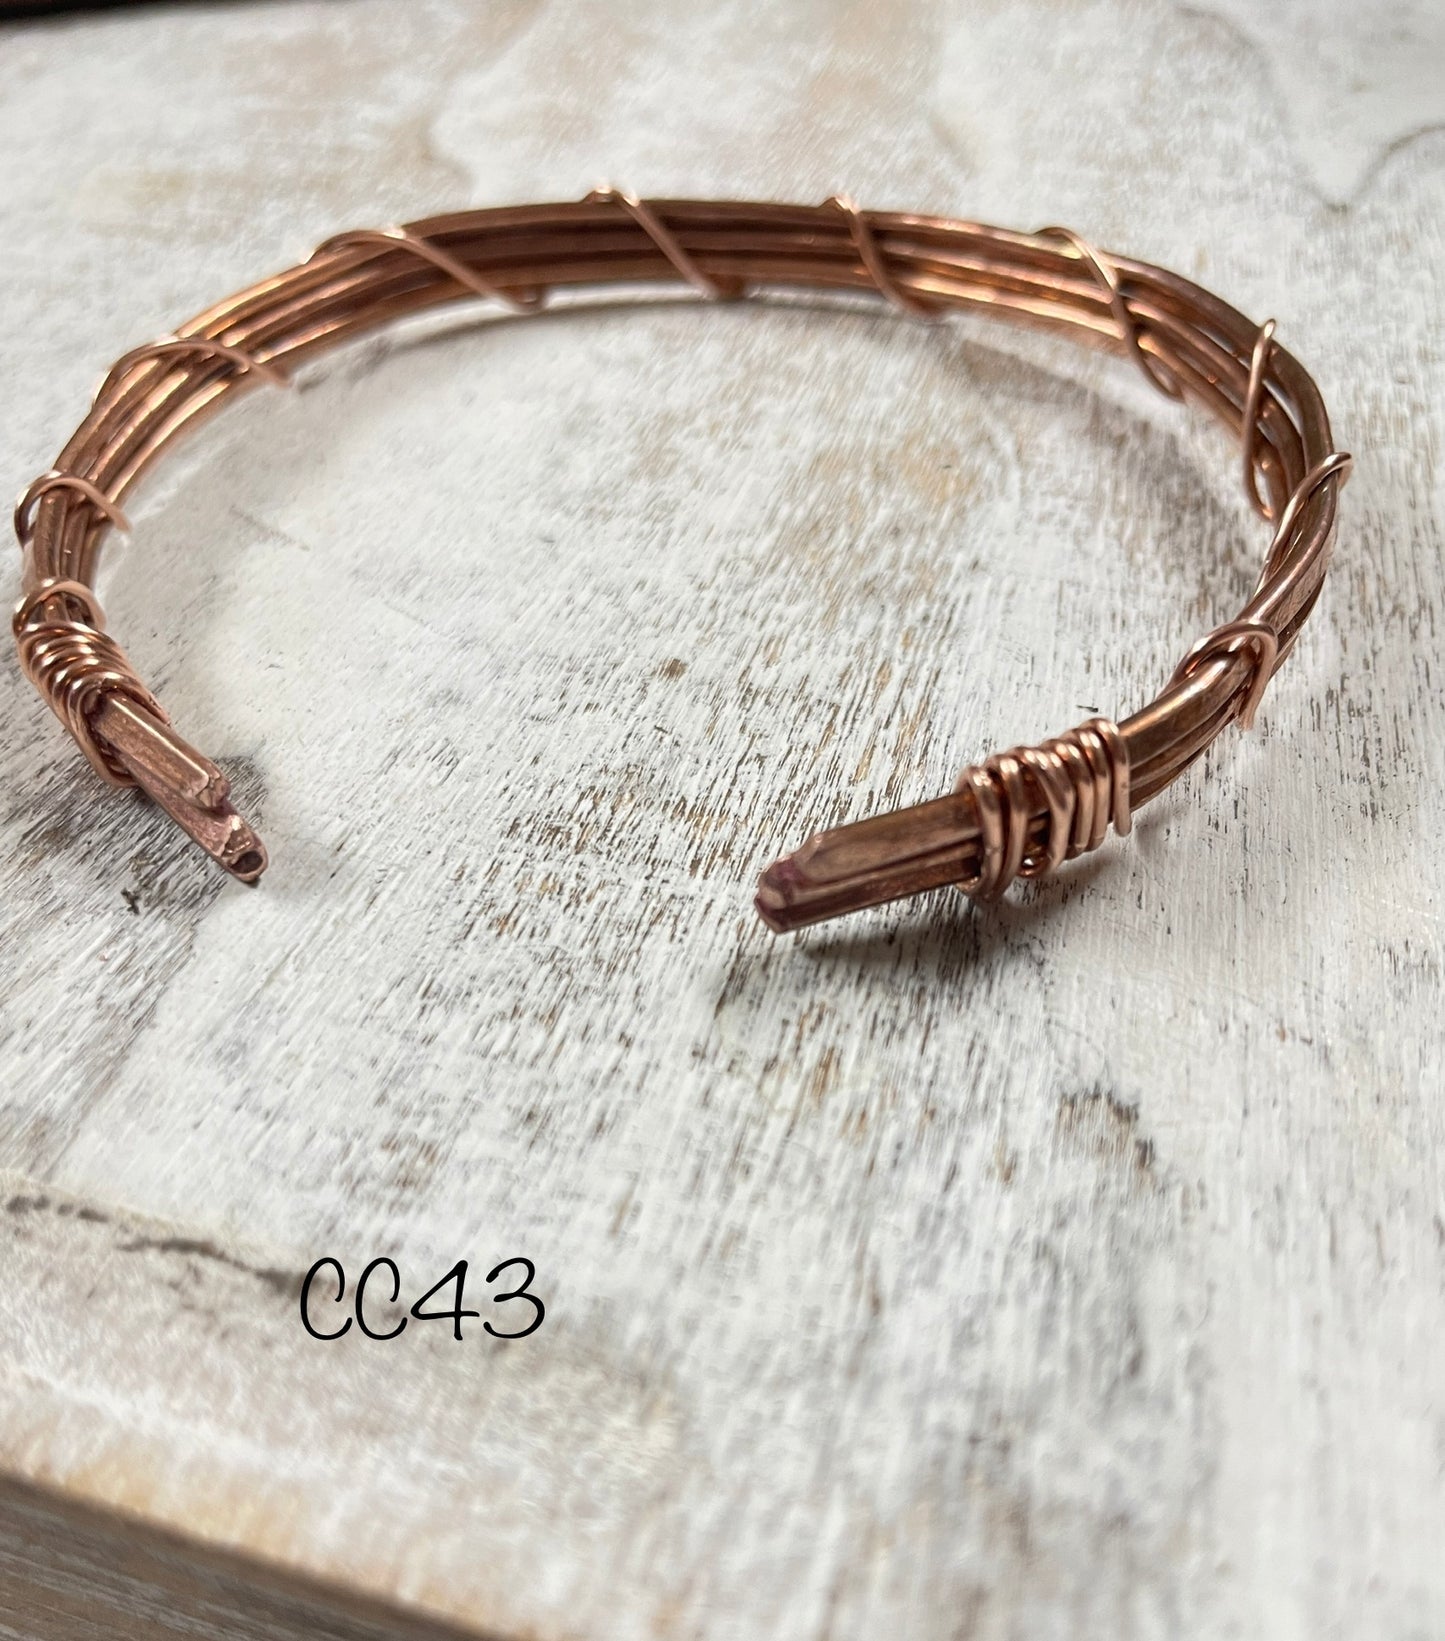 Three Stacks Copper Bracelet-CC43-Cordial